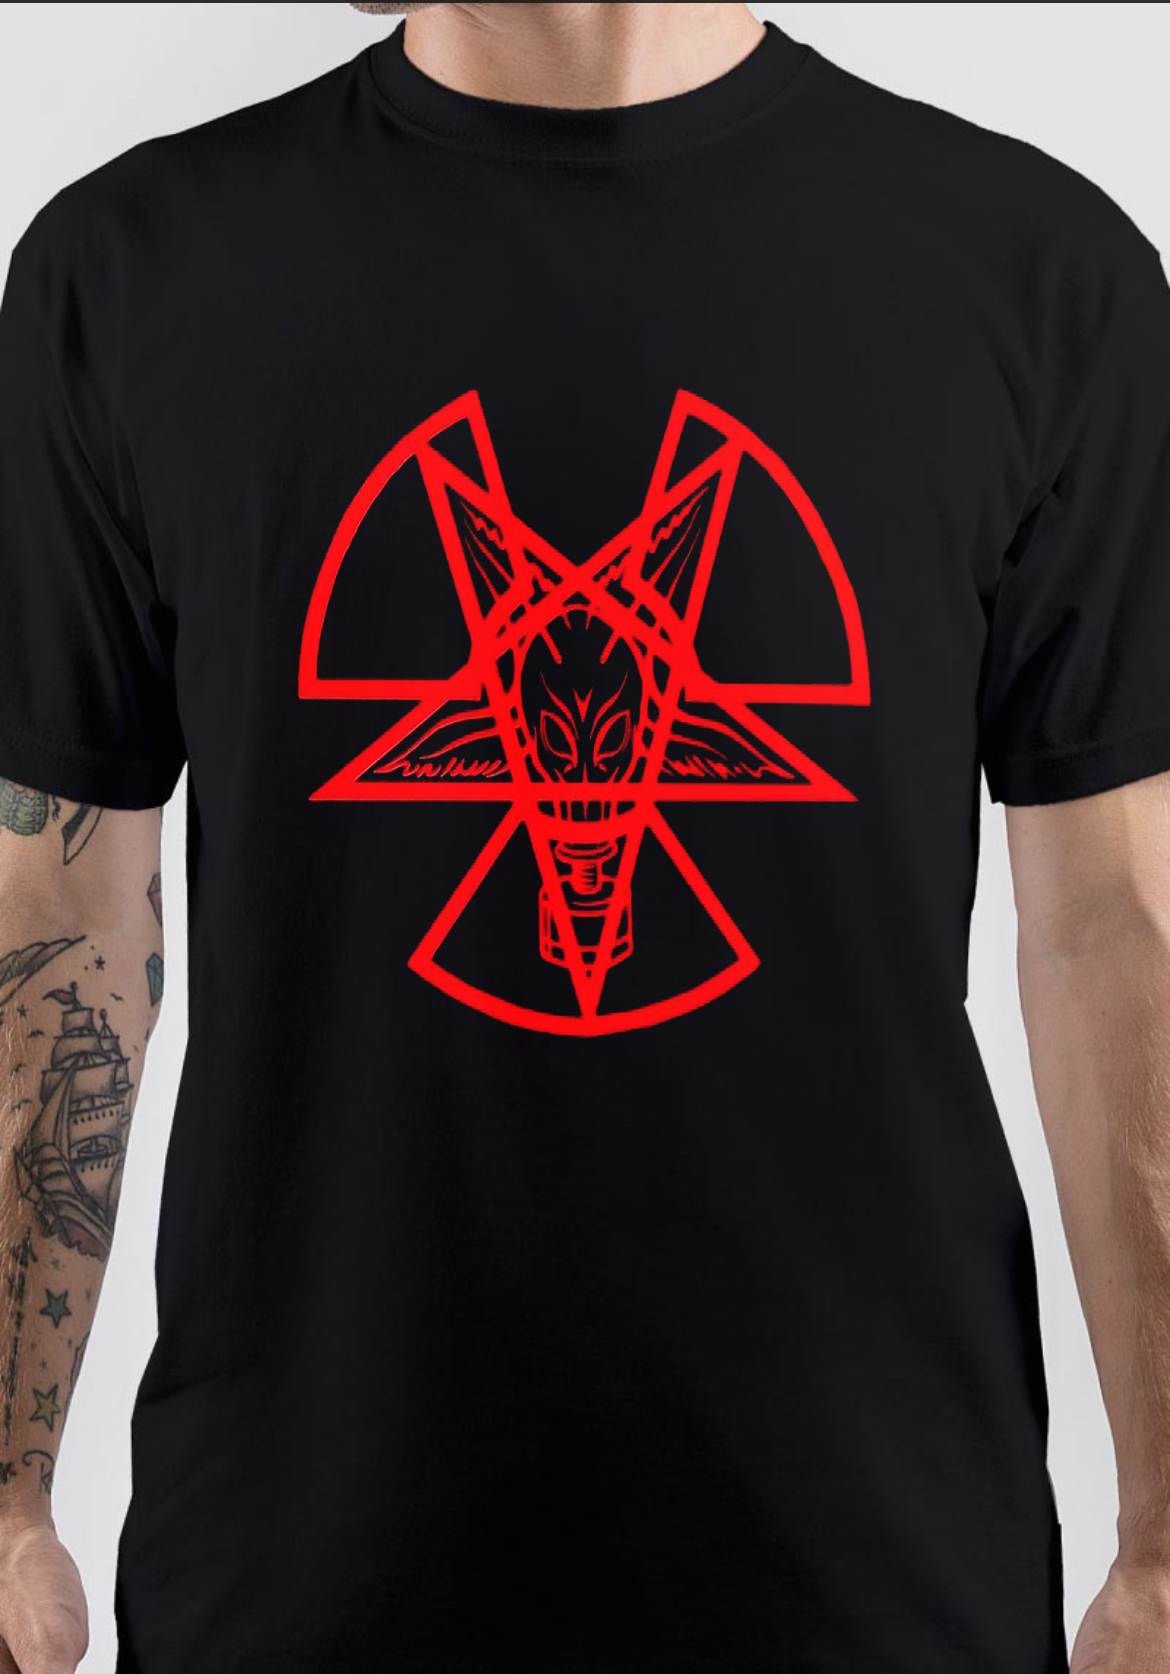 Impaled Nazarene T-Shirt And Merchandise